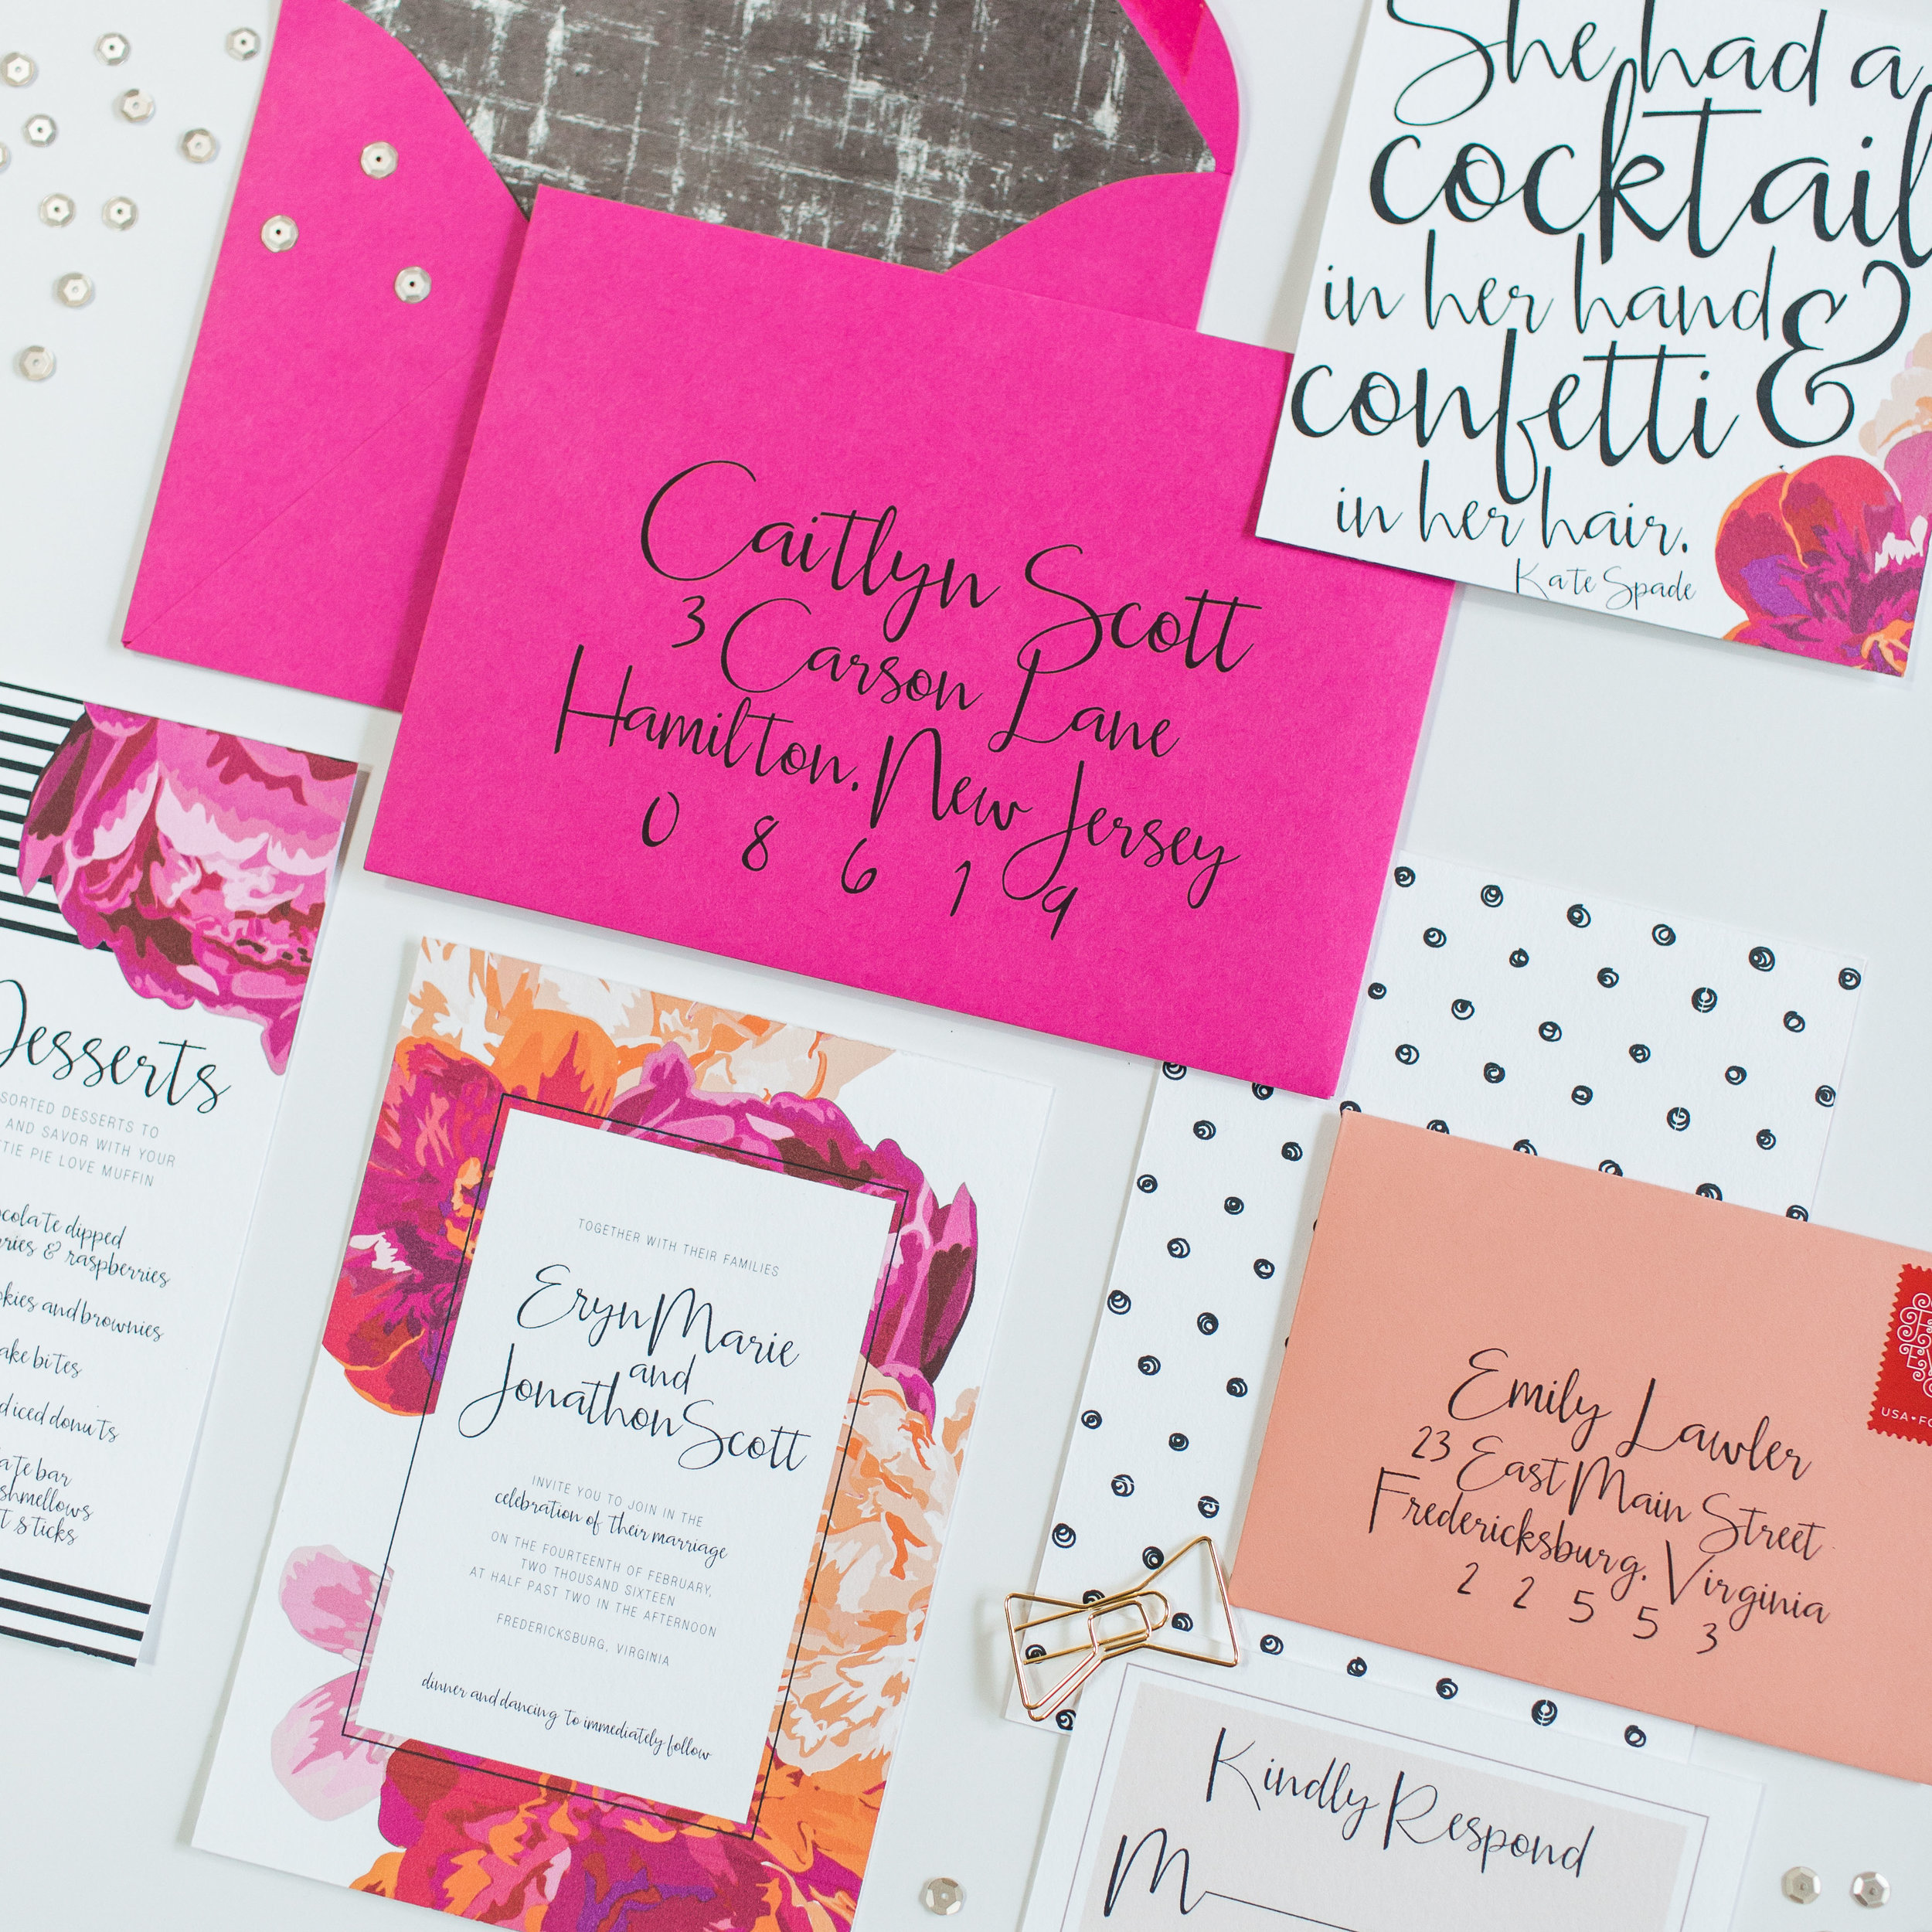 custom gold foil wedding invitations | new jersey wedding invitation designer | princeton invitation designer | elegant and floral wedding invitations | kate spade wedding invitations